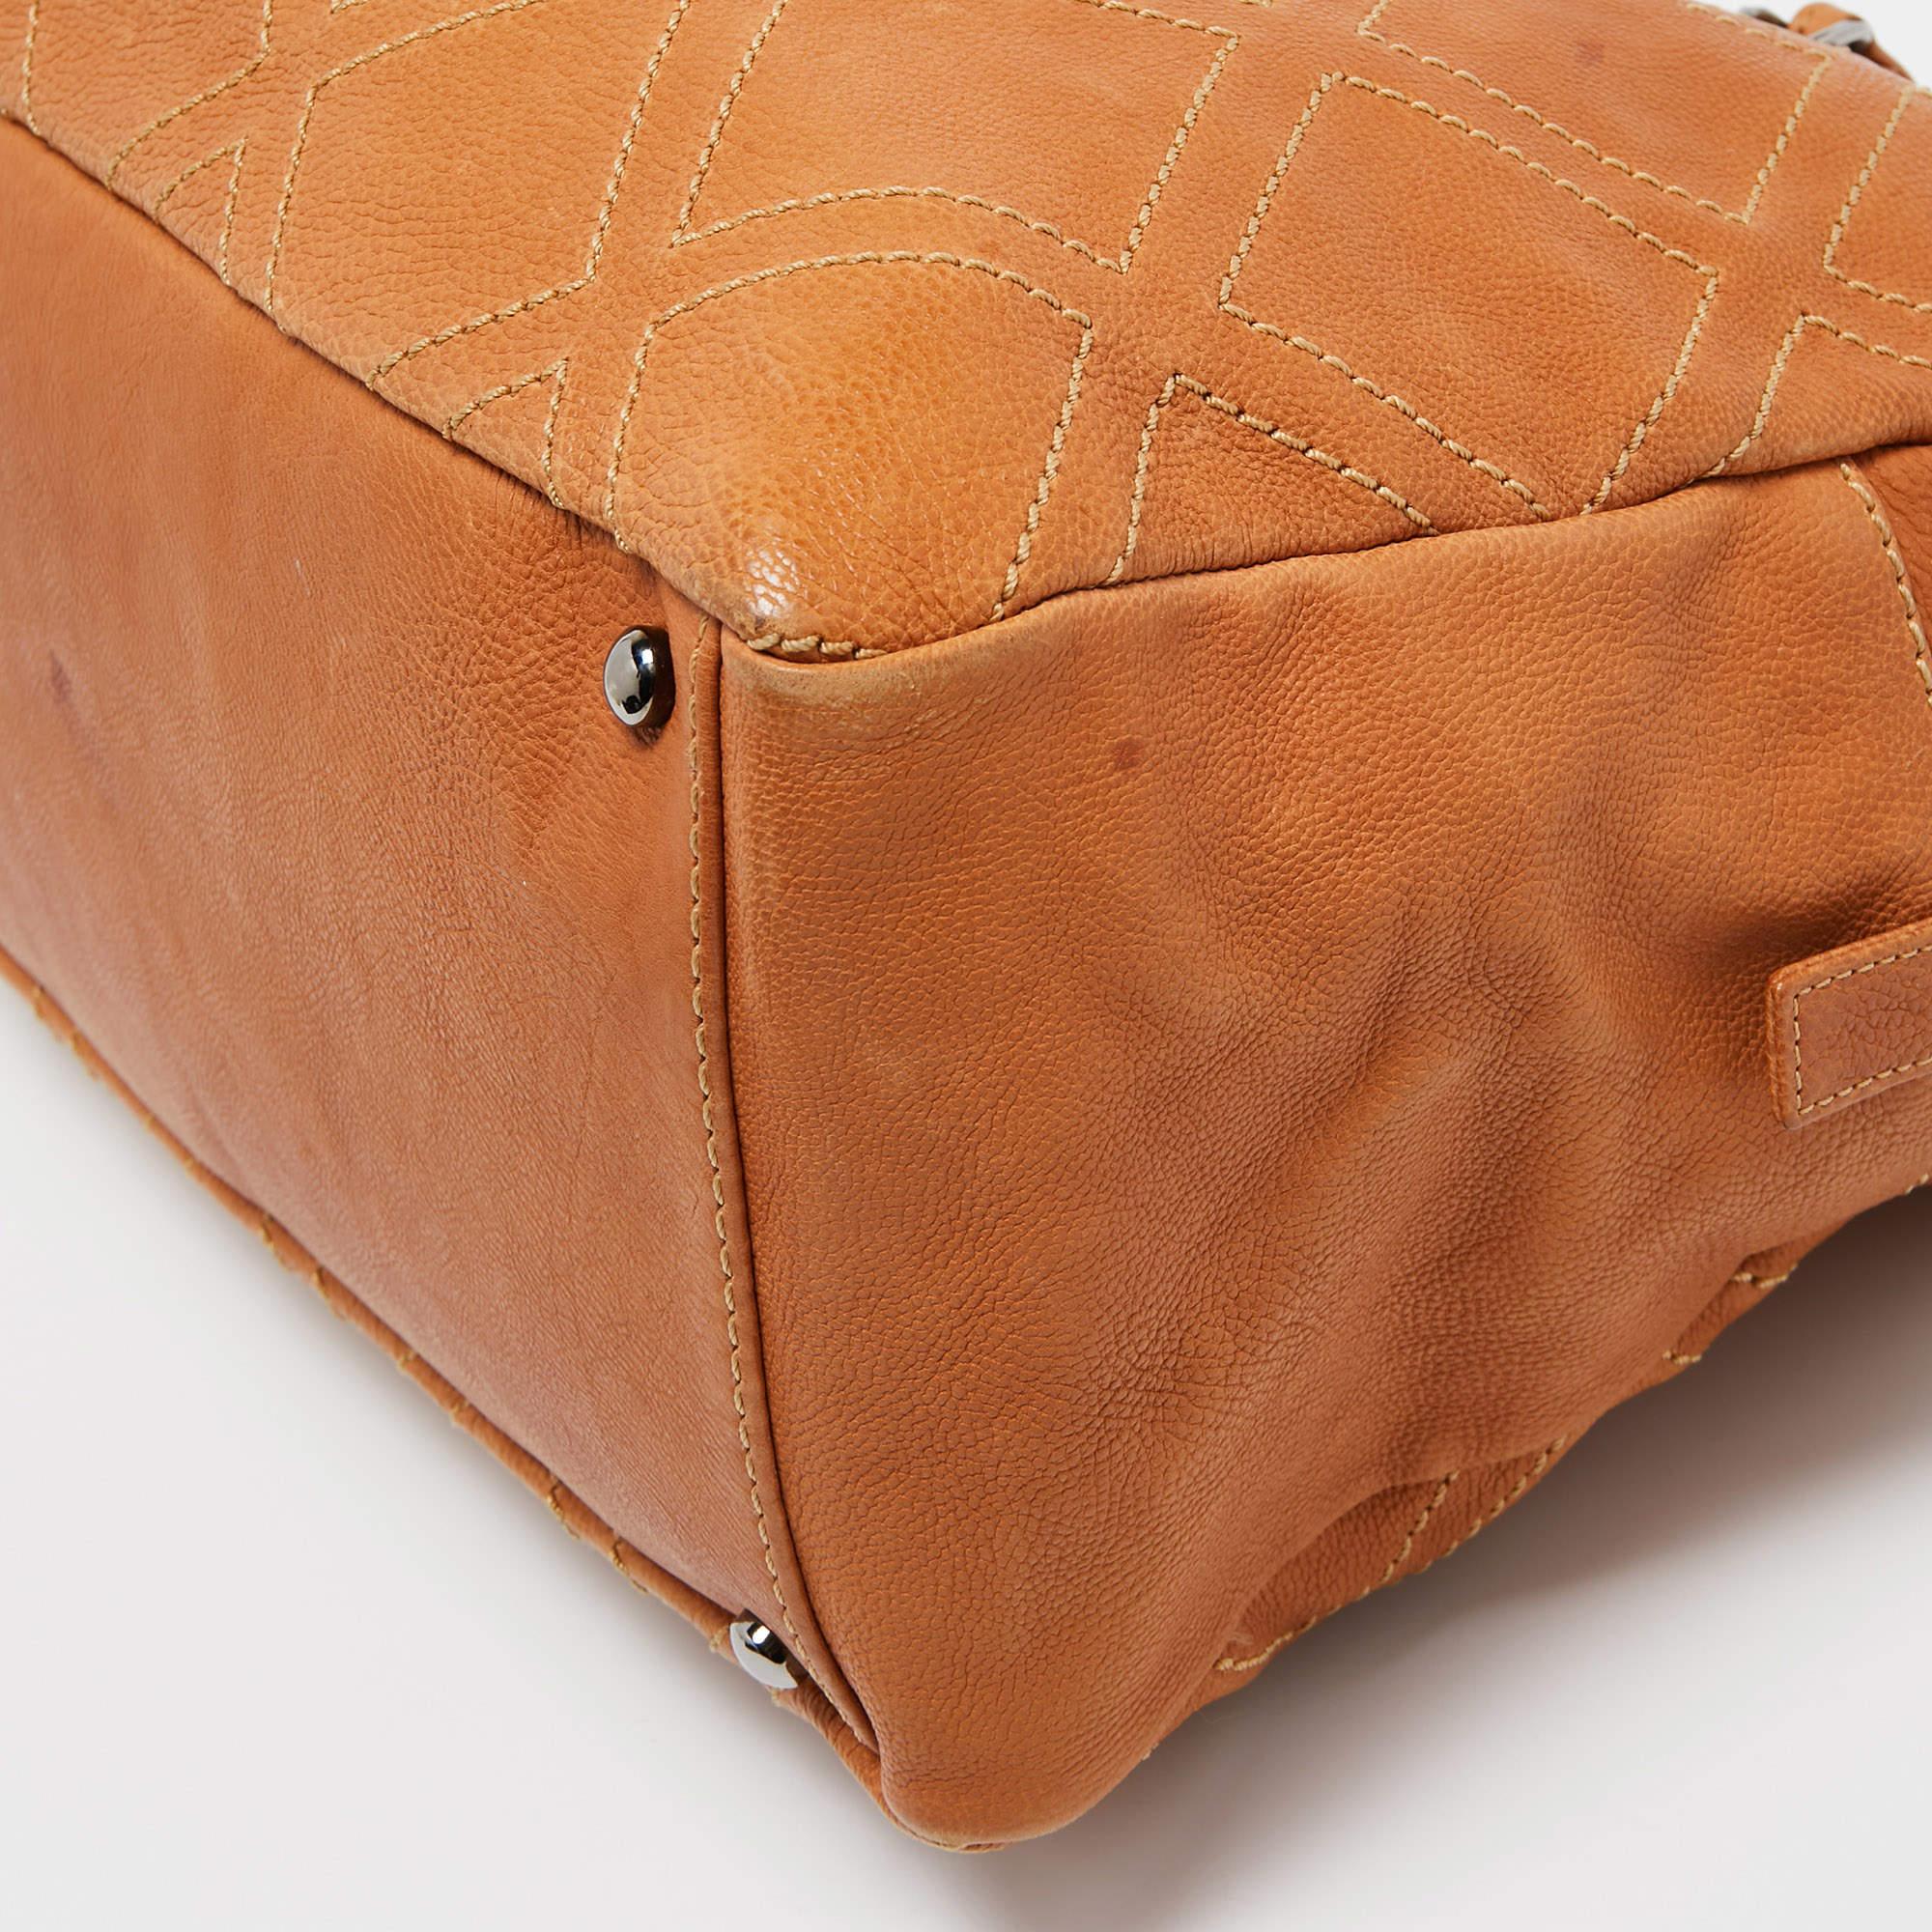 Chanel Tan Leather Triple Compartment Chain Shoulder Bag 16